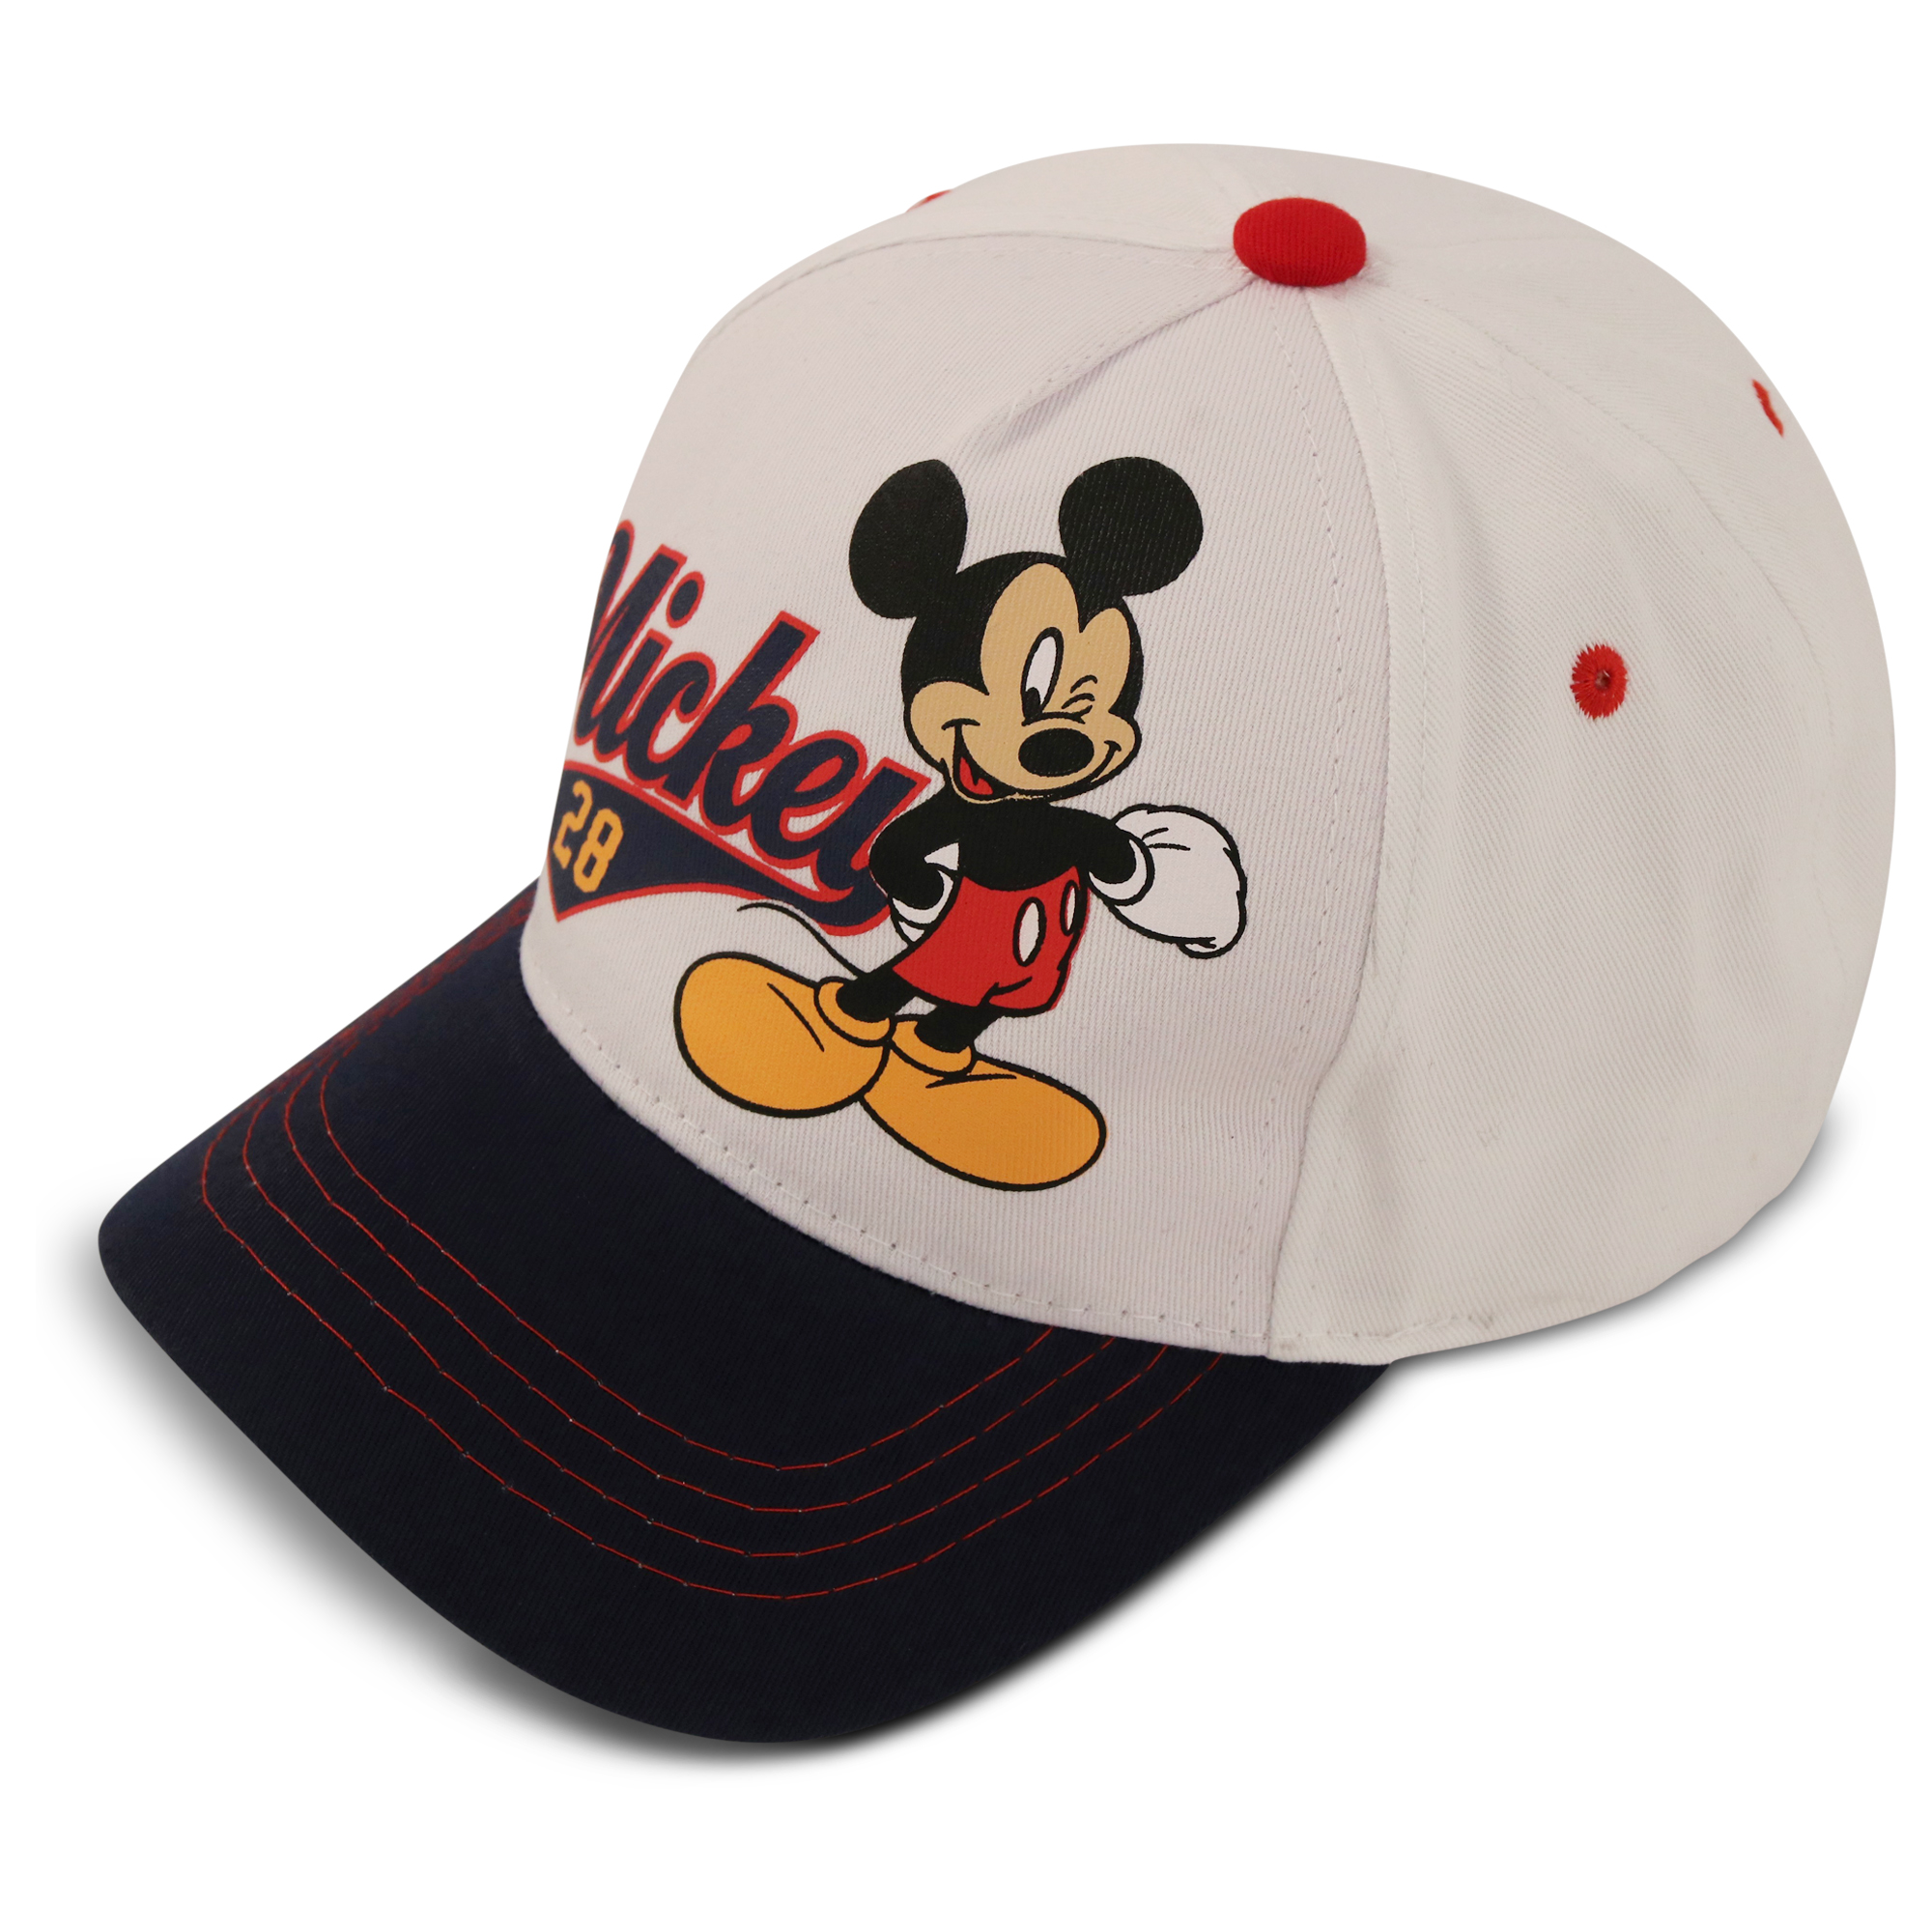 Little hat. Кепка HM С Микки. Бейсболка Микки Маус взрослая. Кепка Mickey Mouse Disney. Original Marines кепка Mickey Mouse.